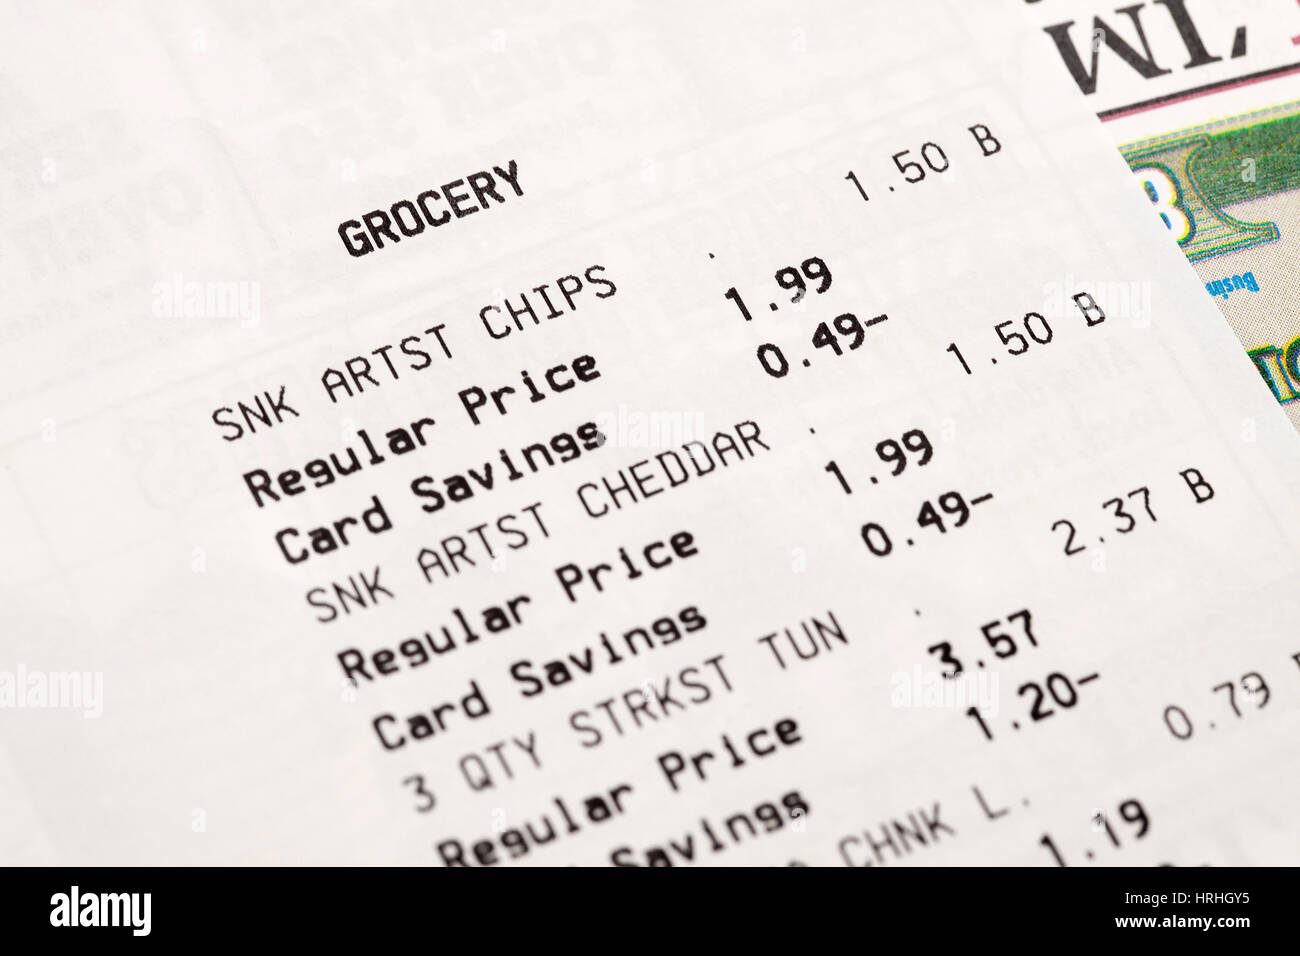 Grocery receipts - USA Stock Photo